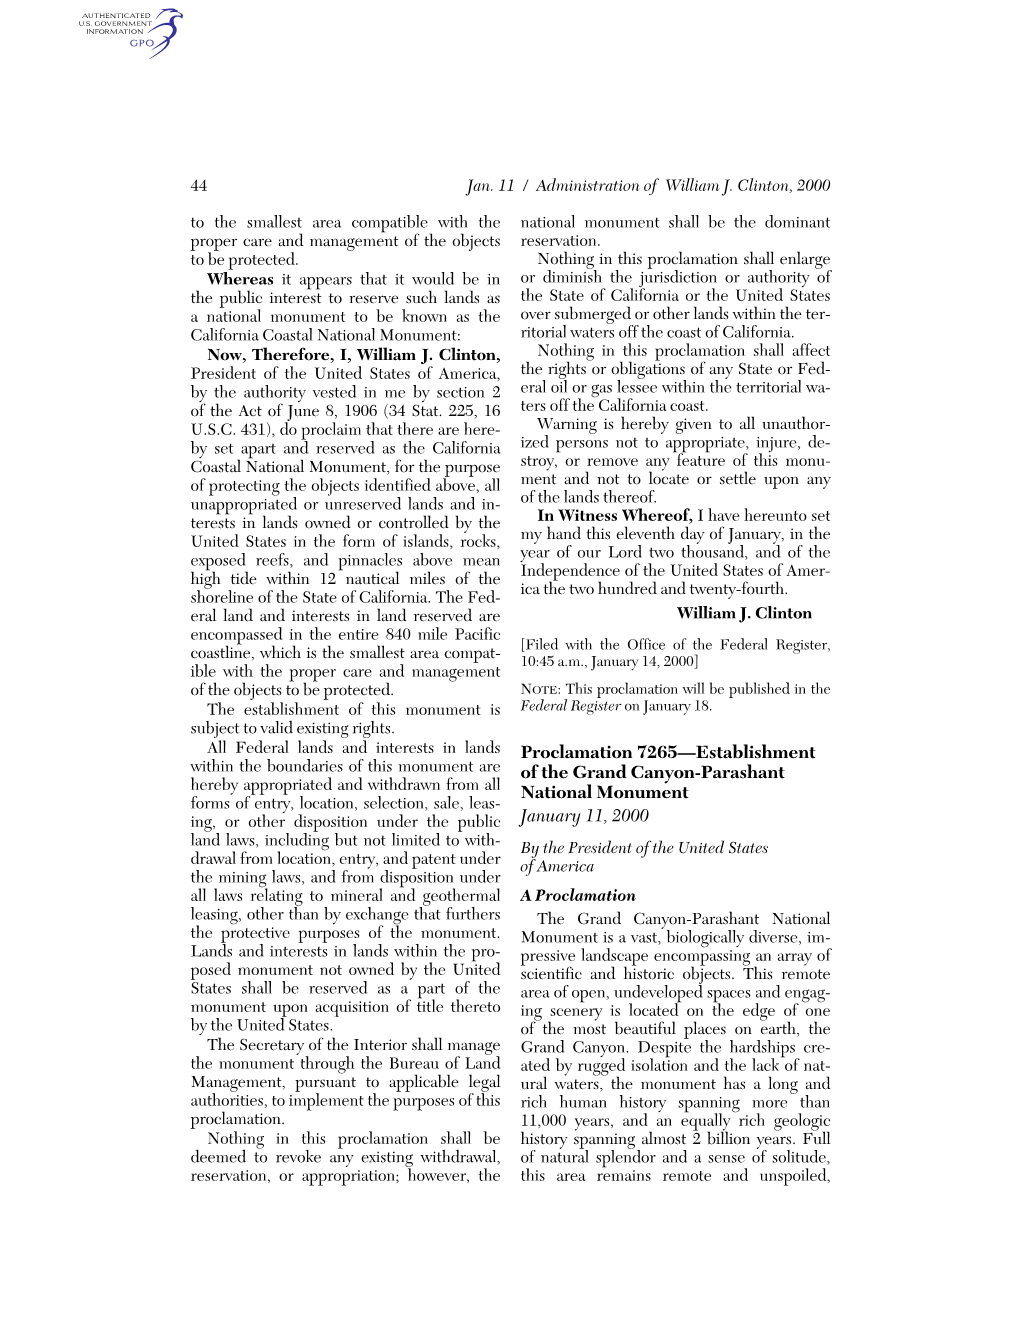 Proclamation 7265—Establishment of the Grand Canyon-Parashant